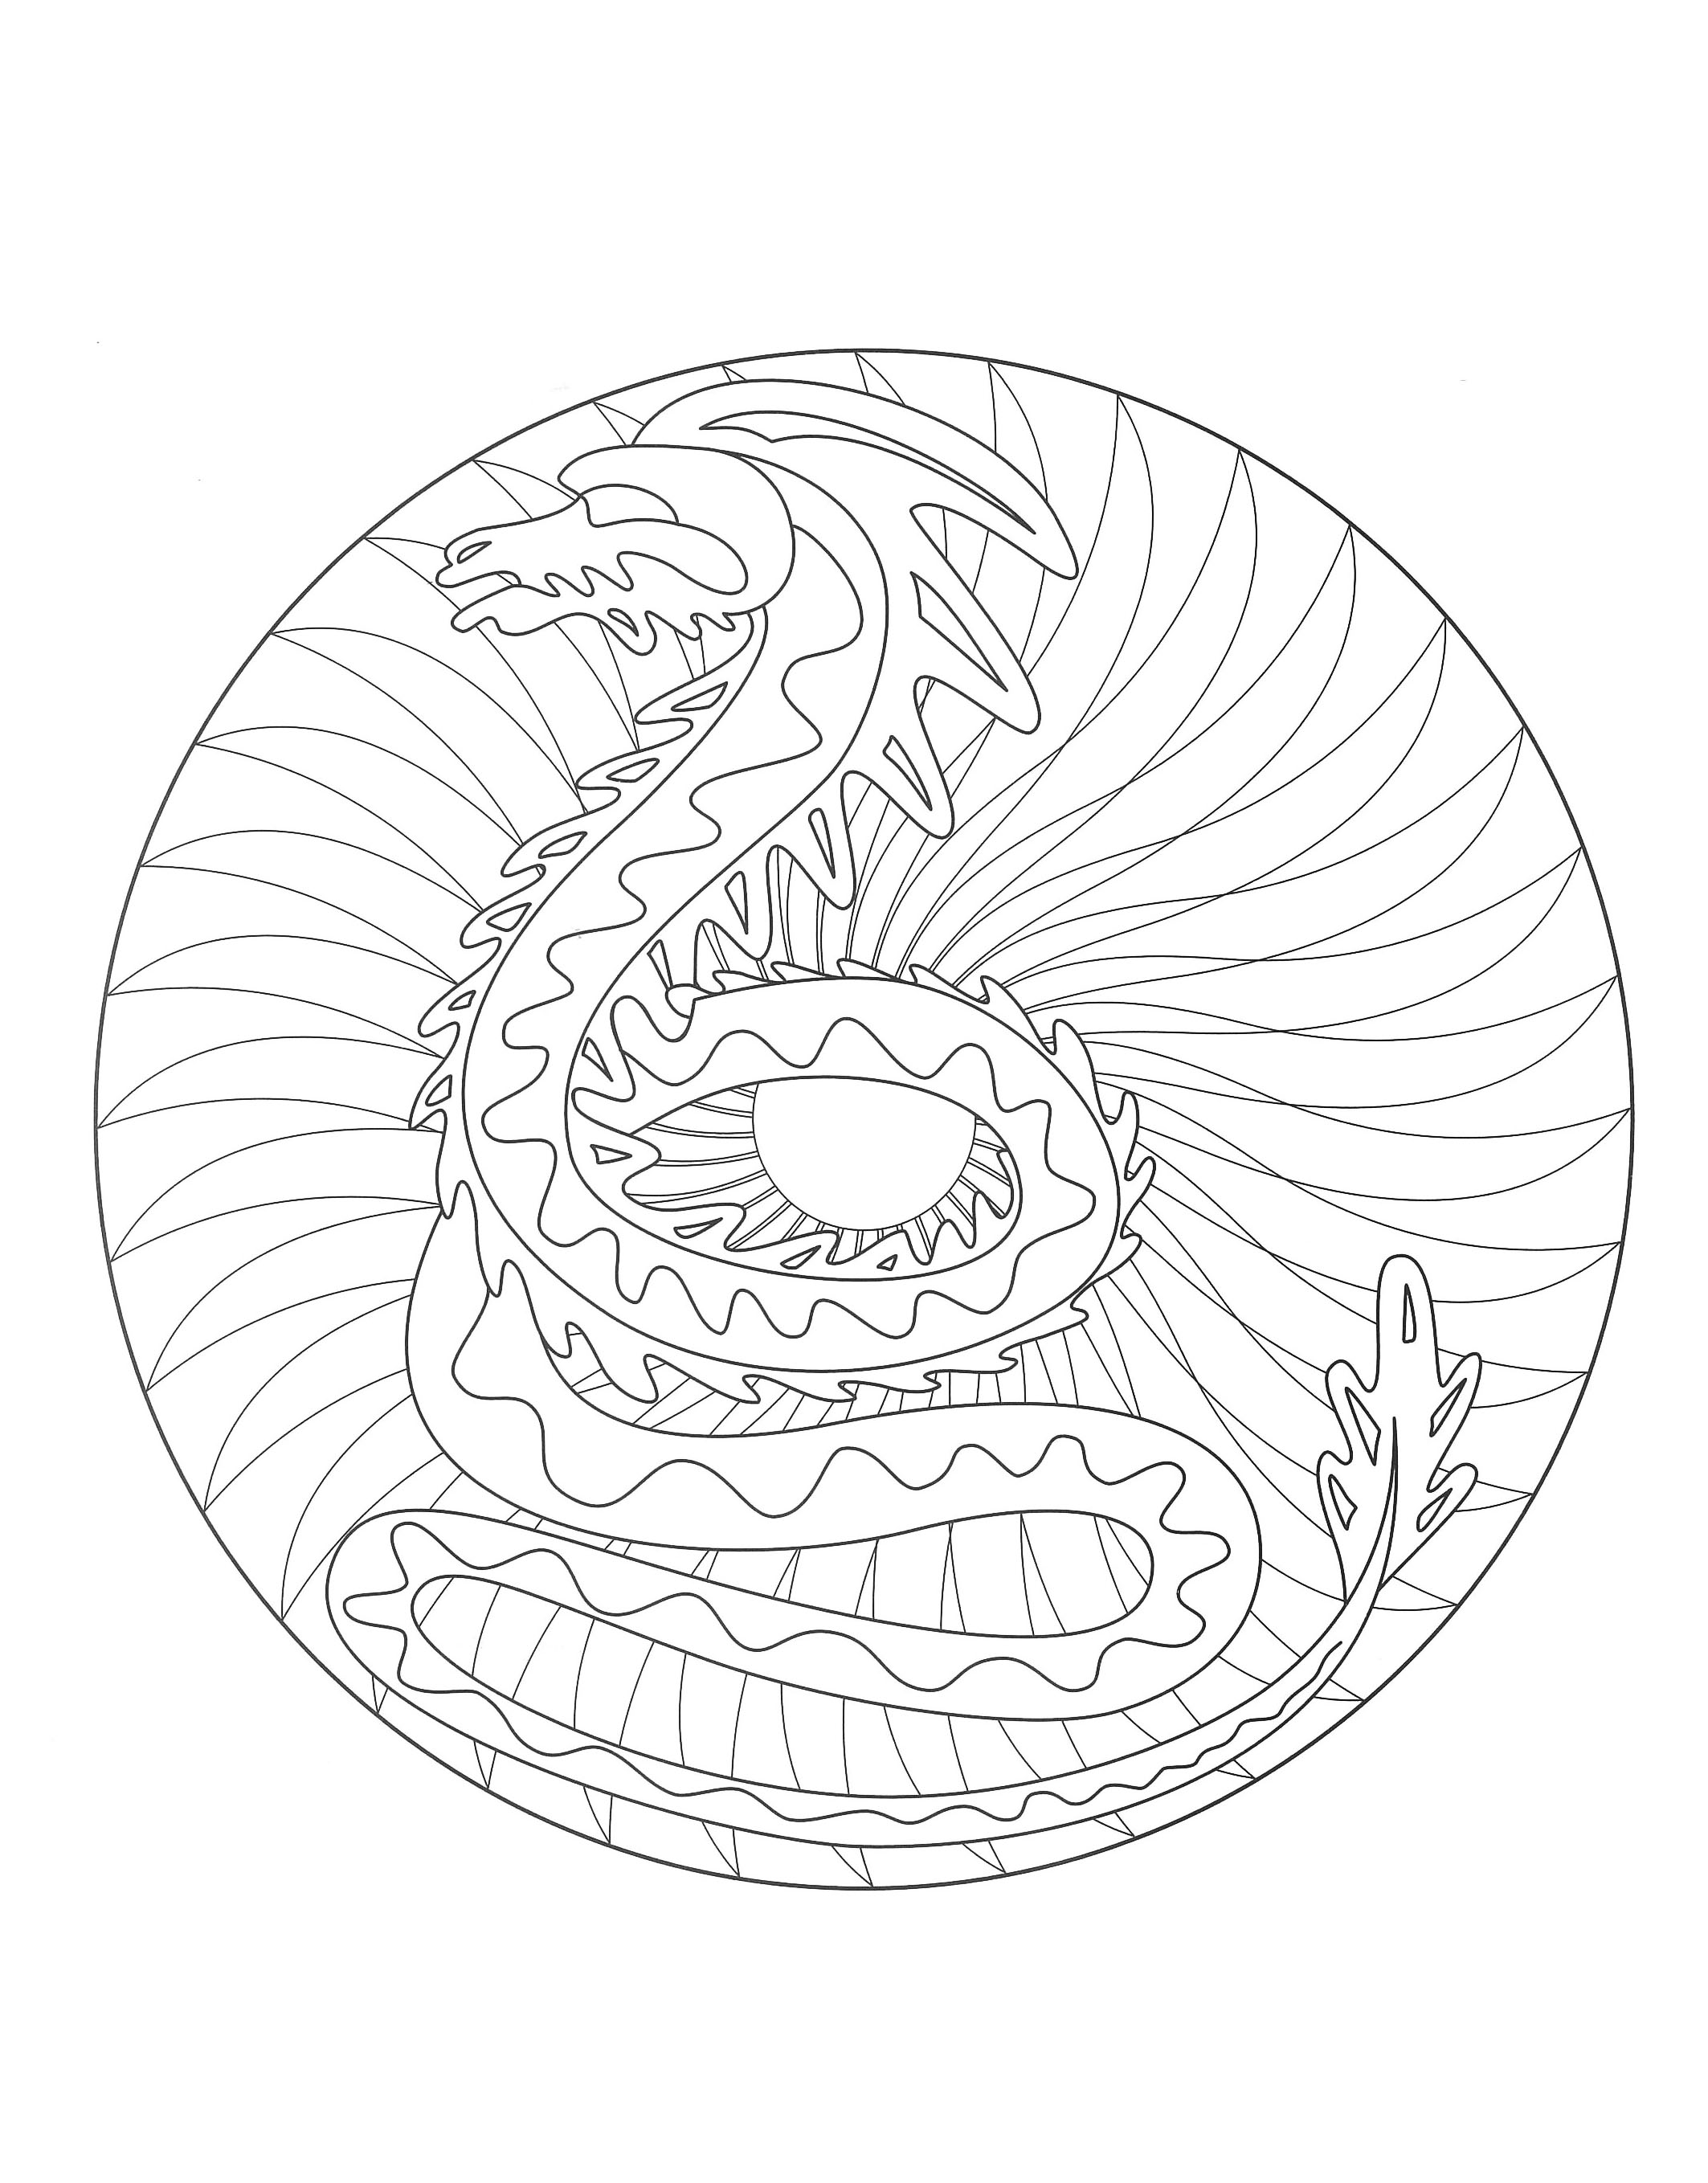 Mandala with a dragon 2